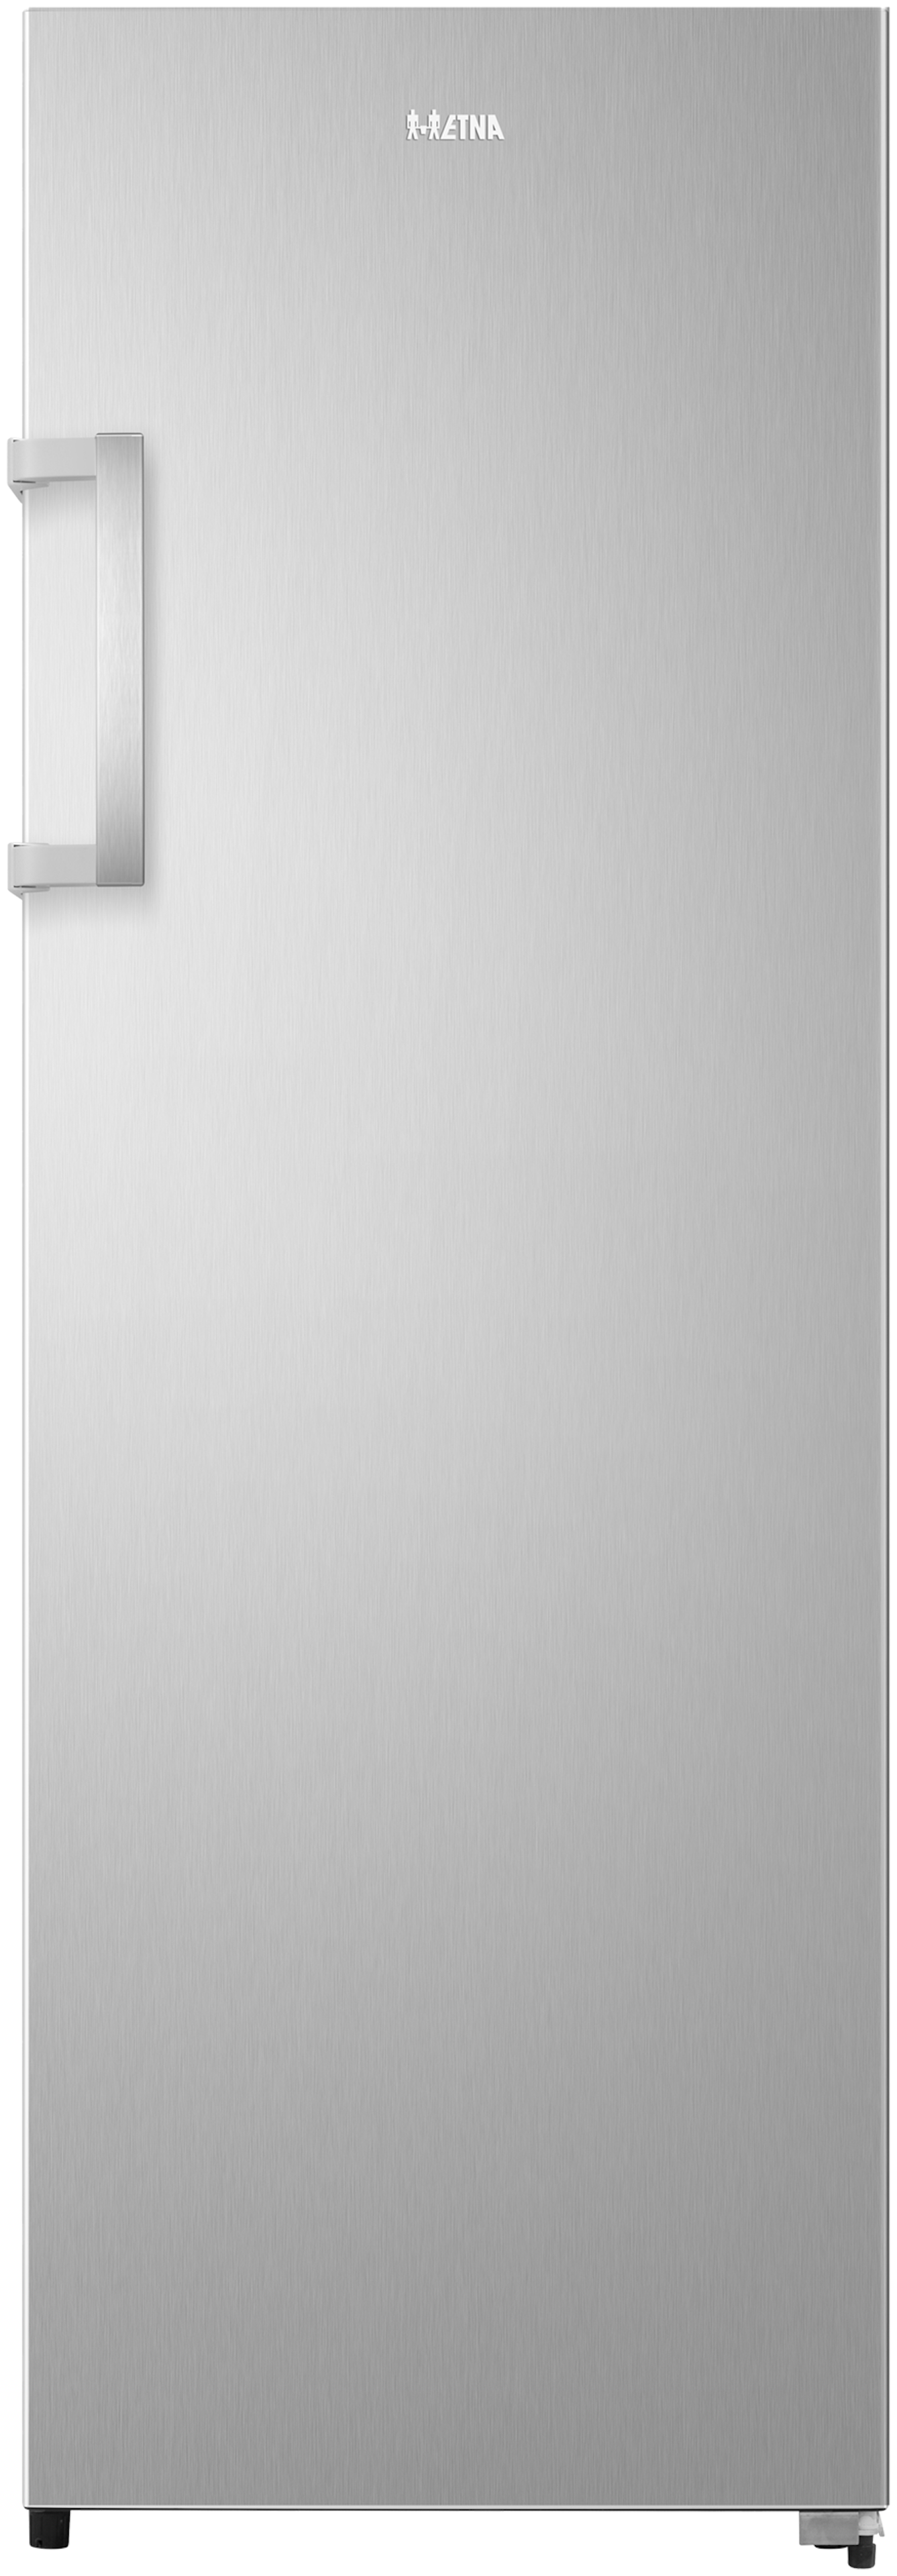 Etna koelkast KKV172RVS afbeelding 3